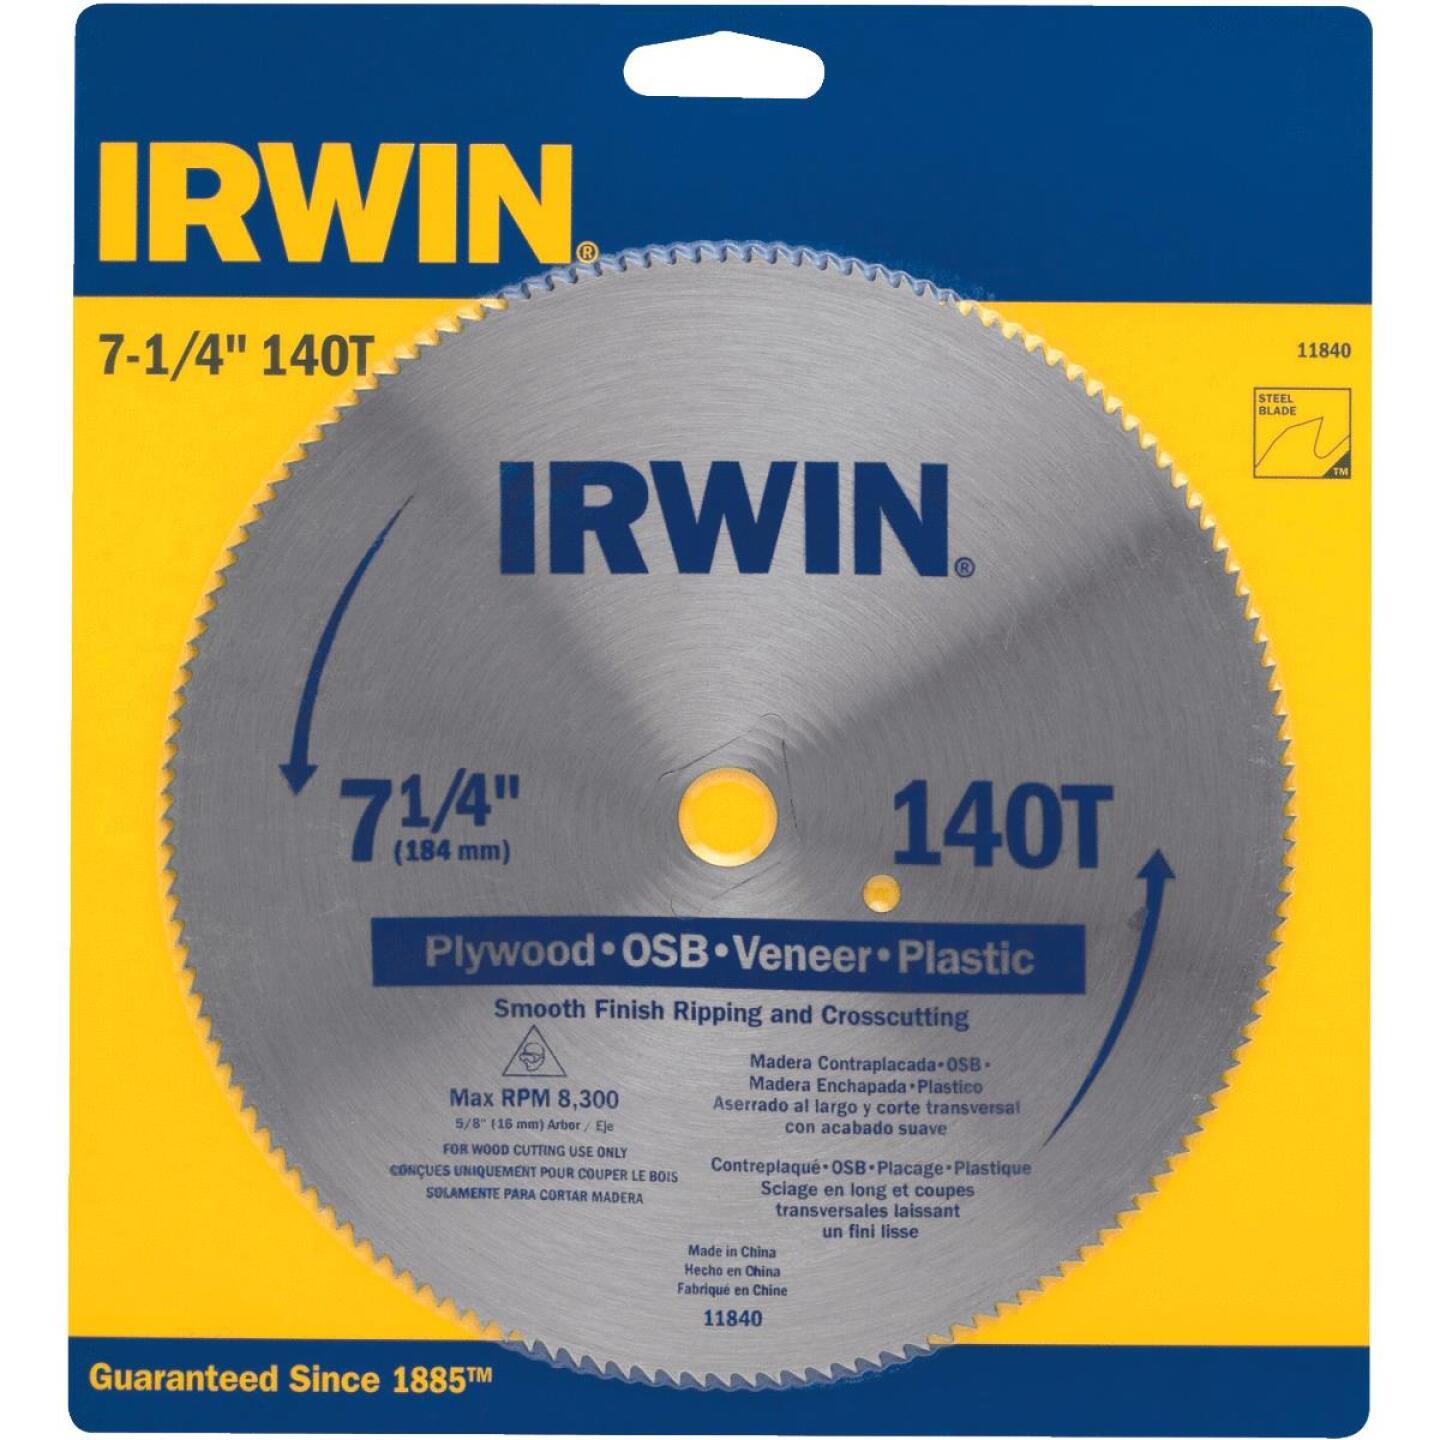 Irwin, Irwin Steel Kreissägeblatt mit 140 Zähnen und glatter Oberfläche für Trenn-/Kreissägearbeiten